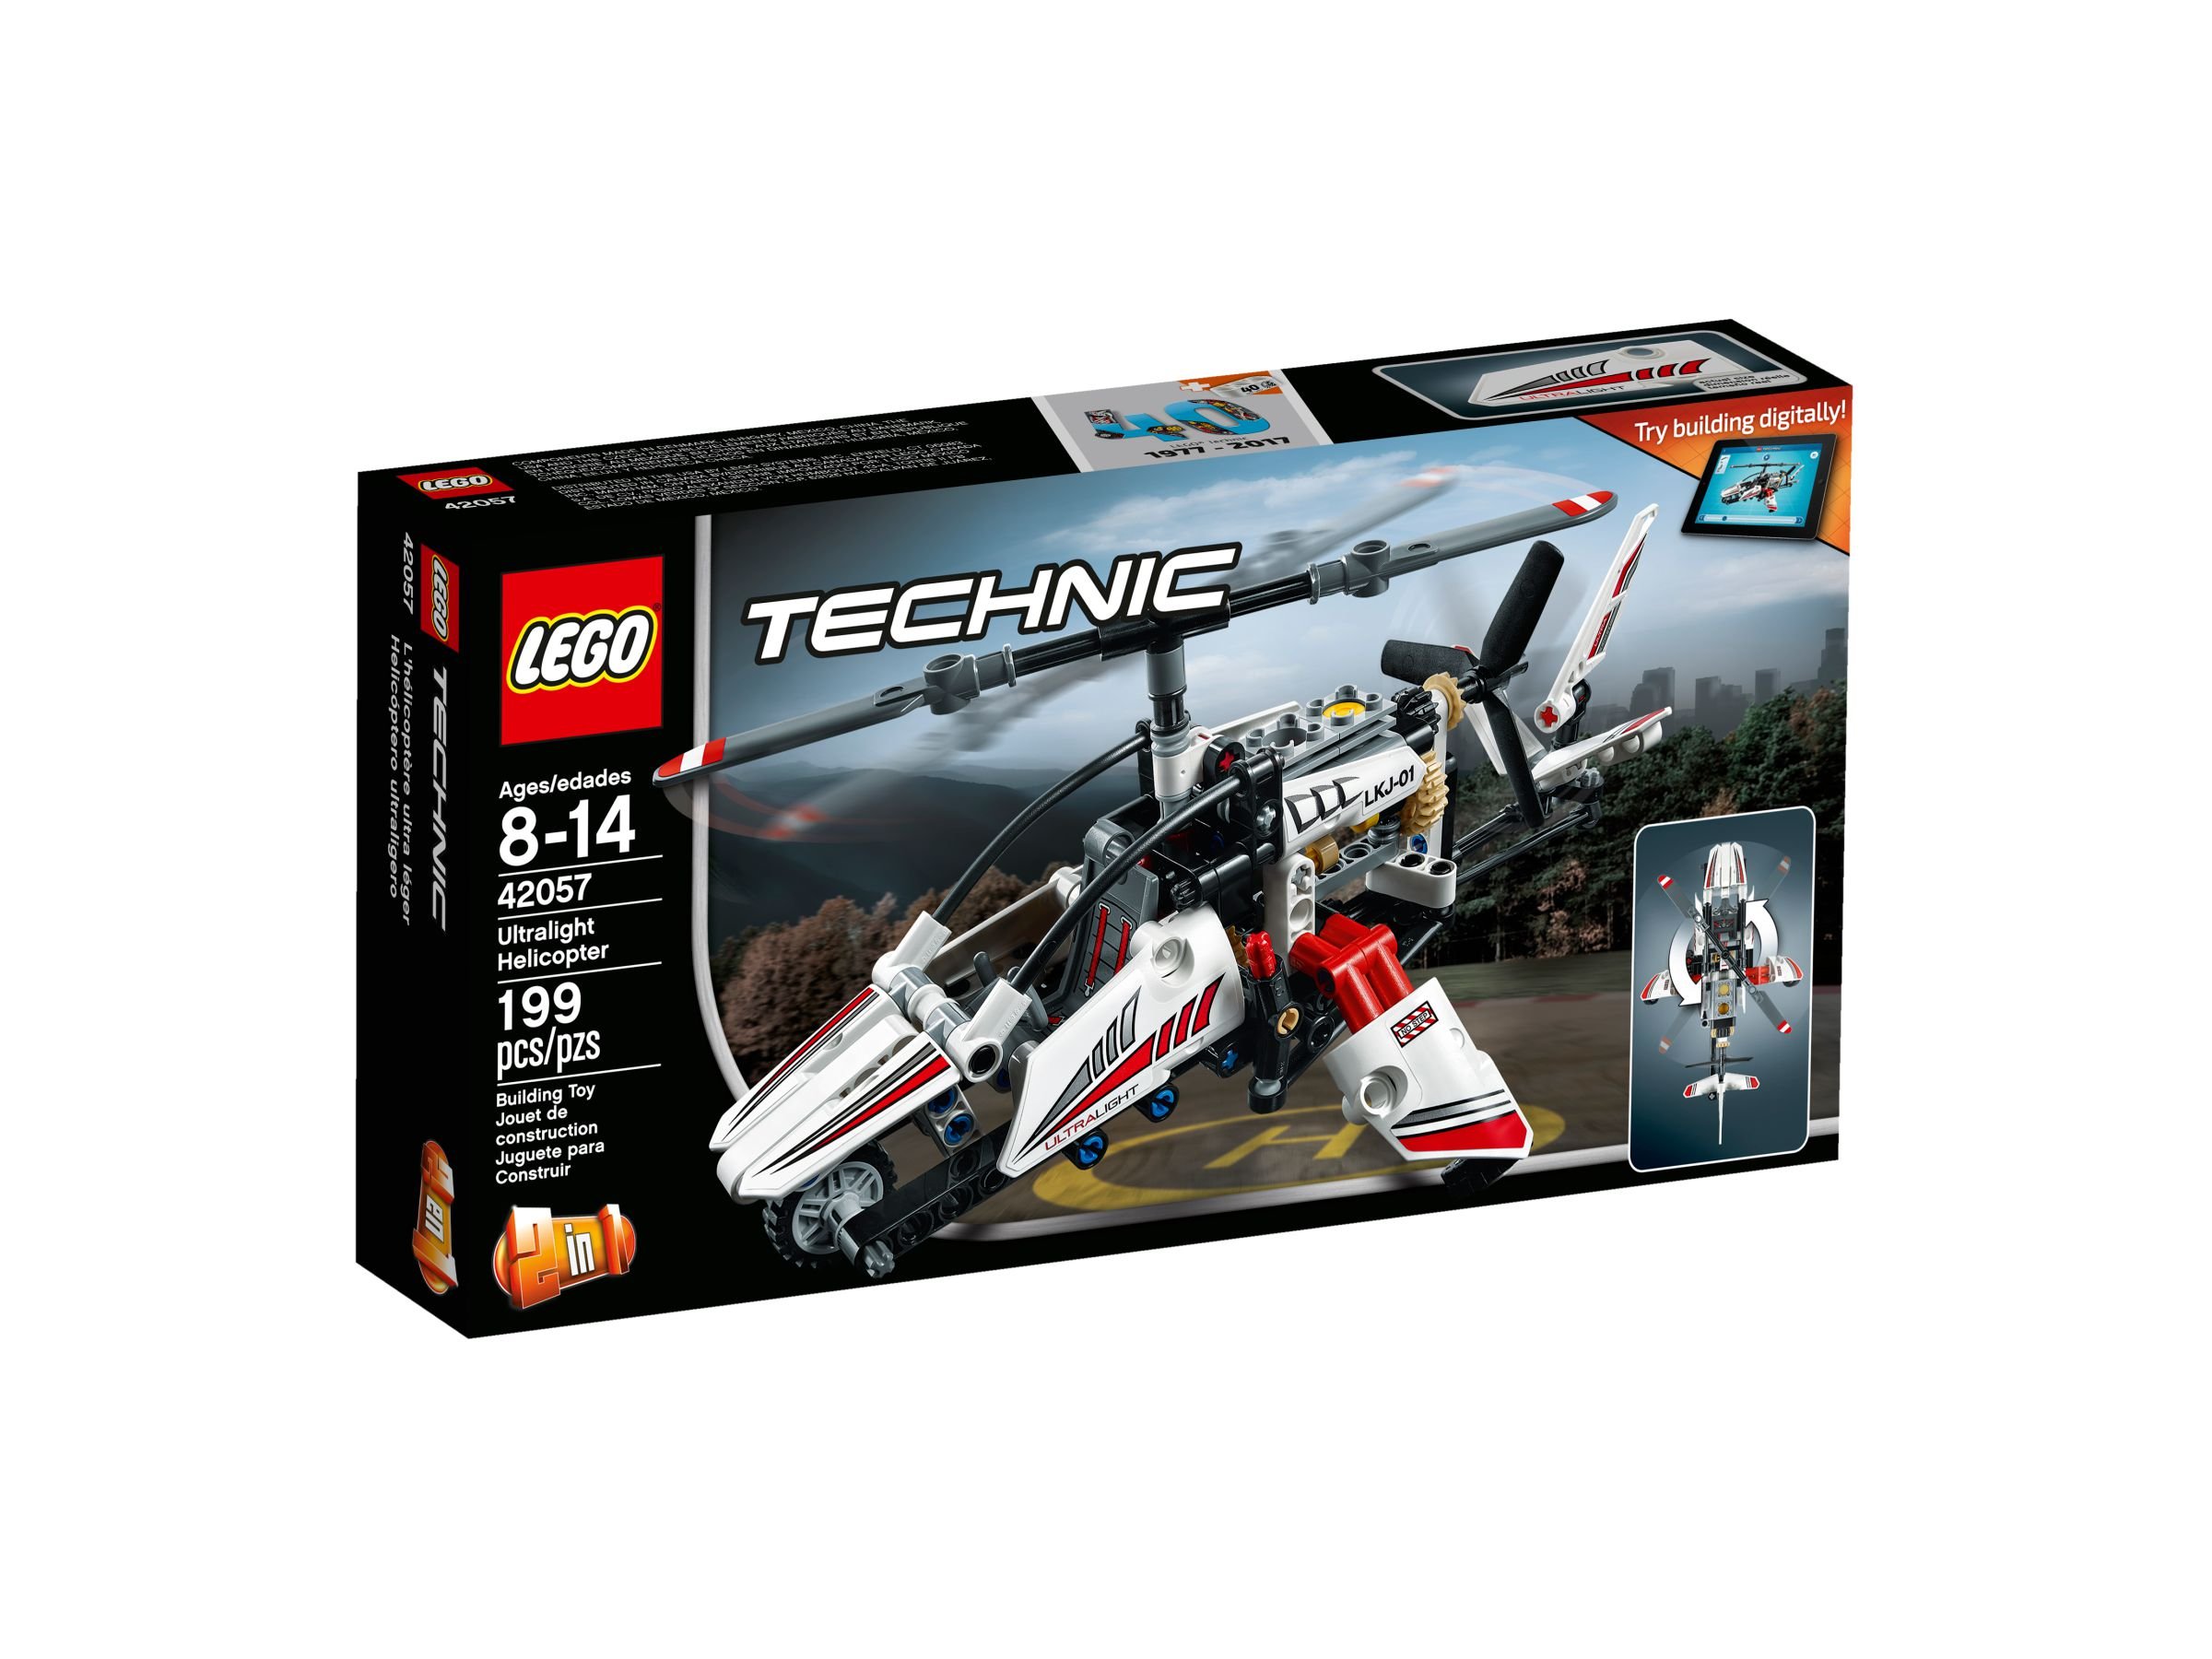 LEGO Technic 42057 Ultraleicht-Hubschrauber LEGO_42057_alt1.jpg